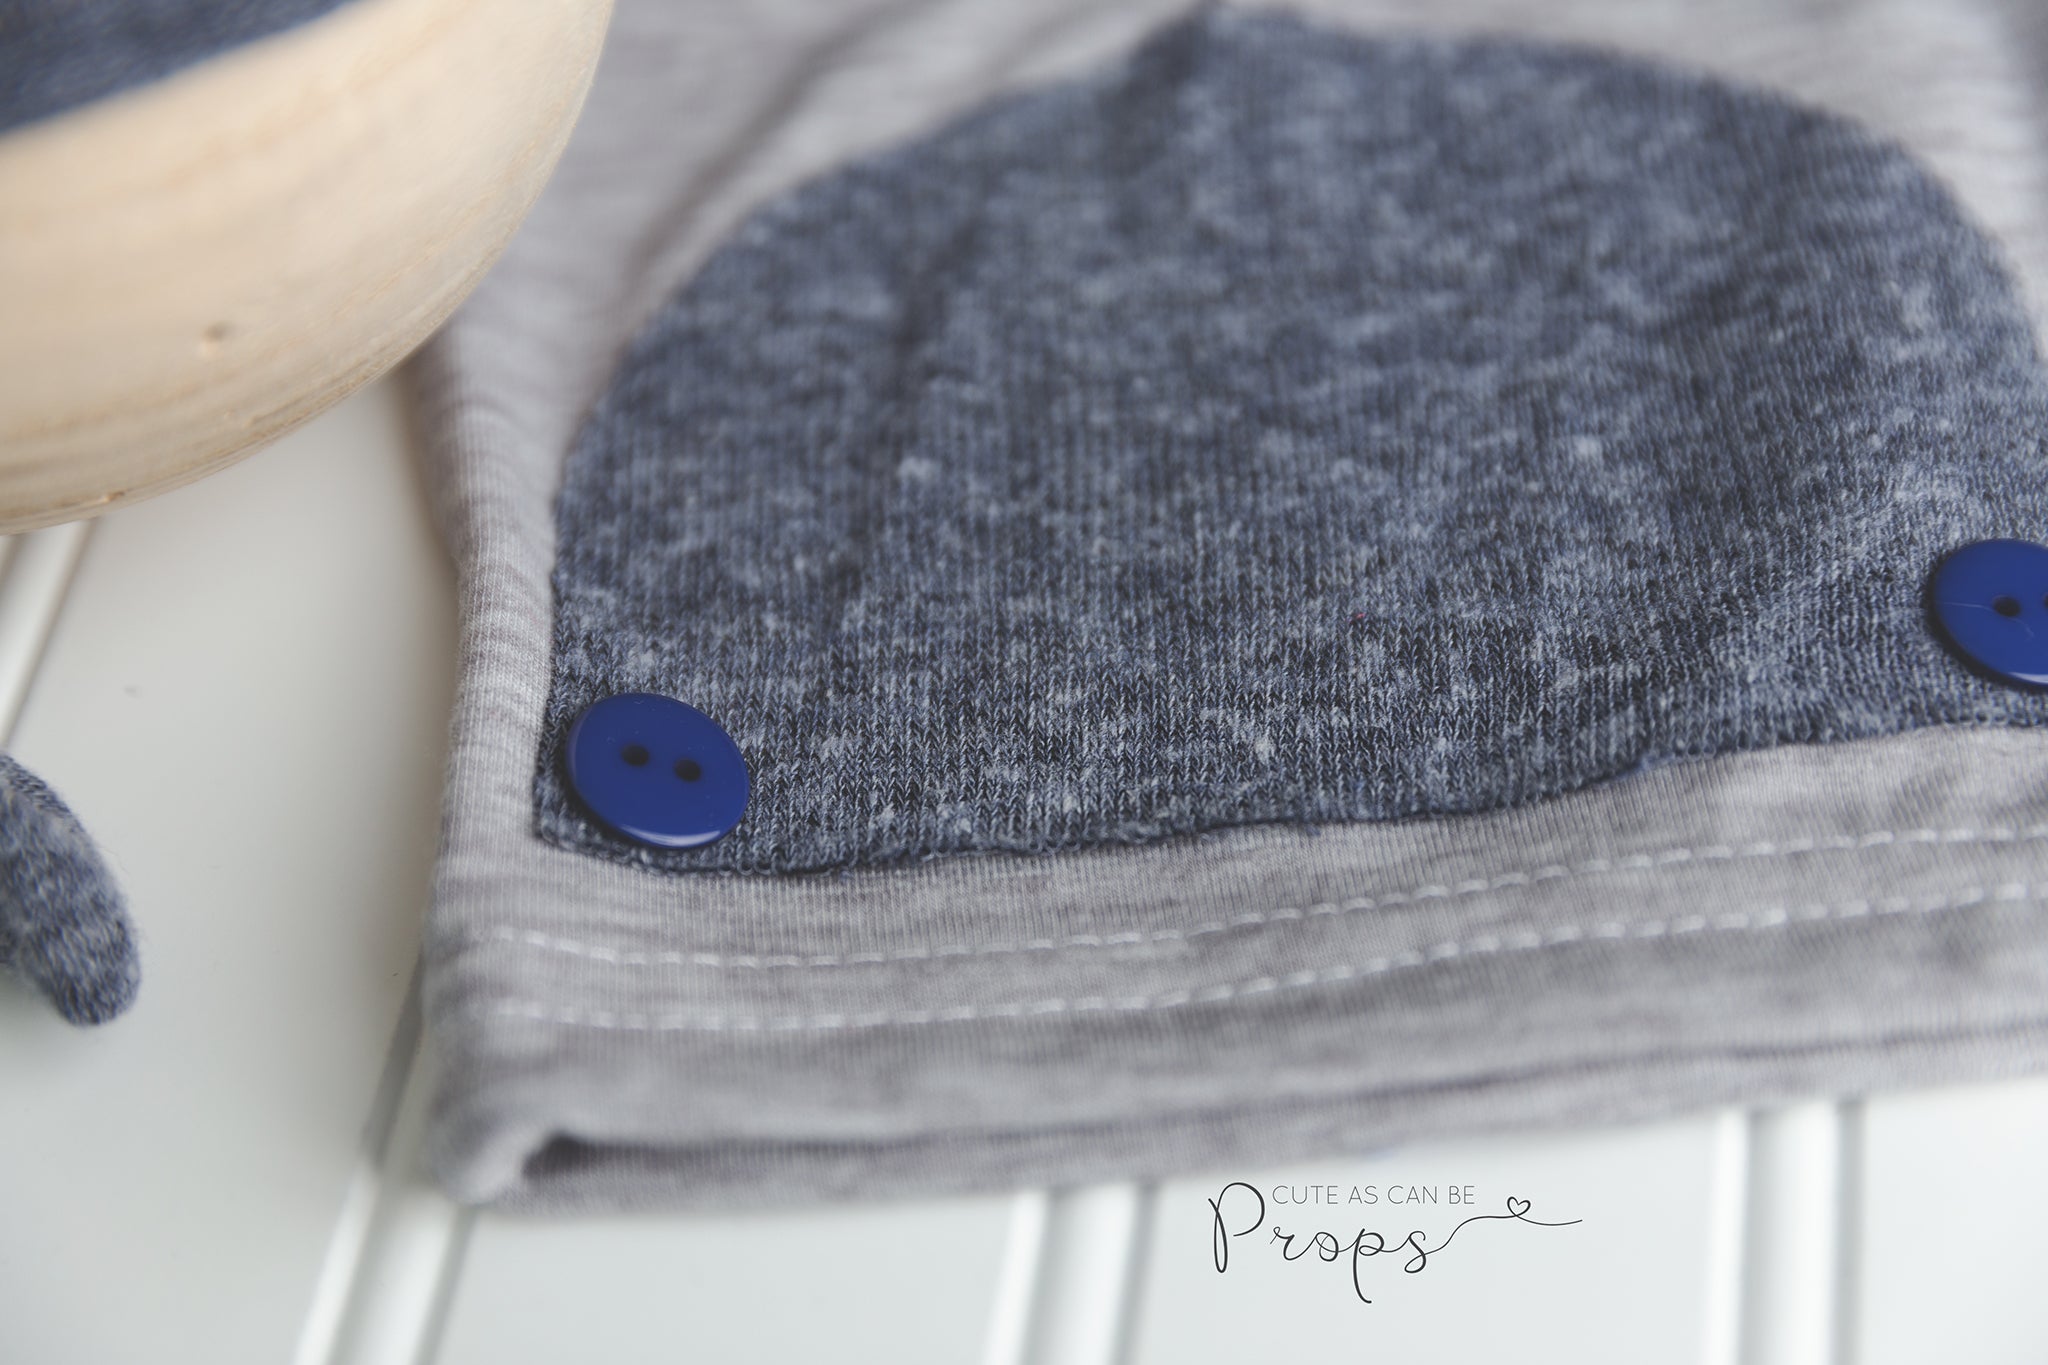 newborn gray pants with blue sleepy hat